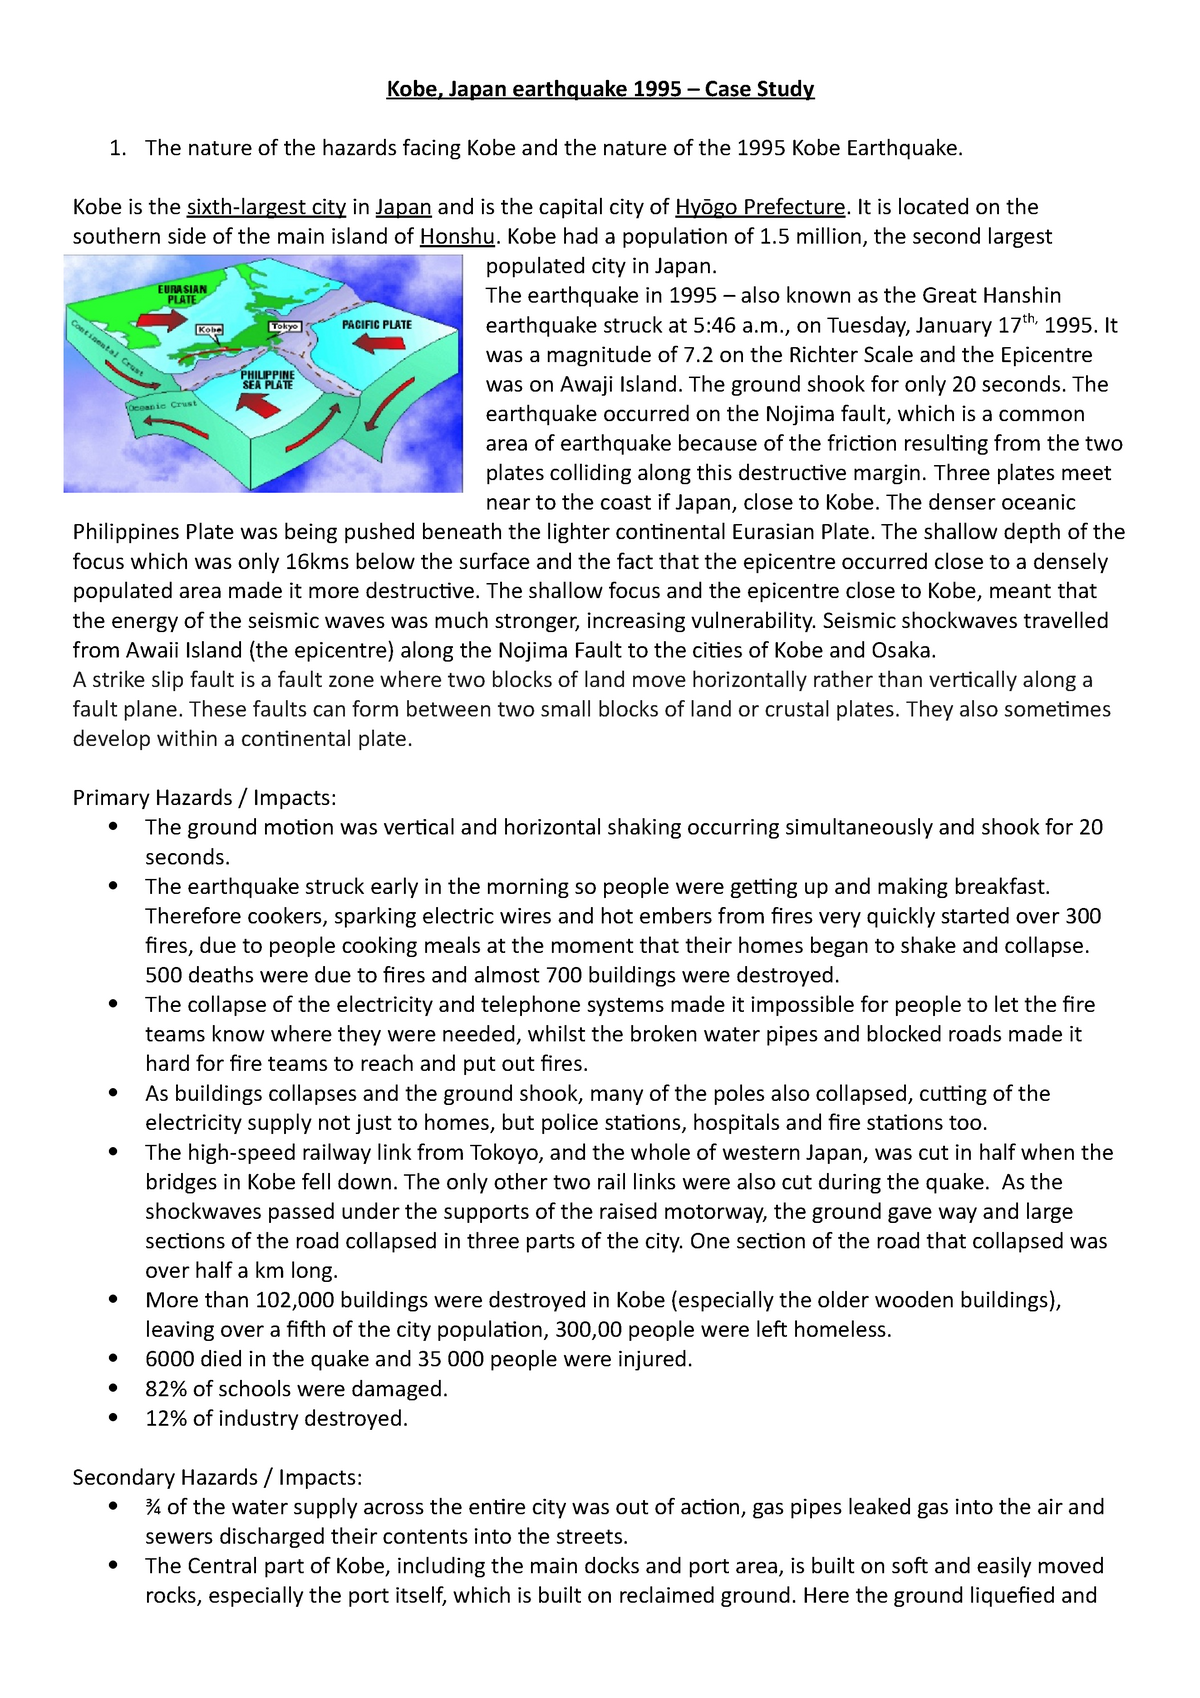 earthquake case study pdf